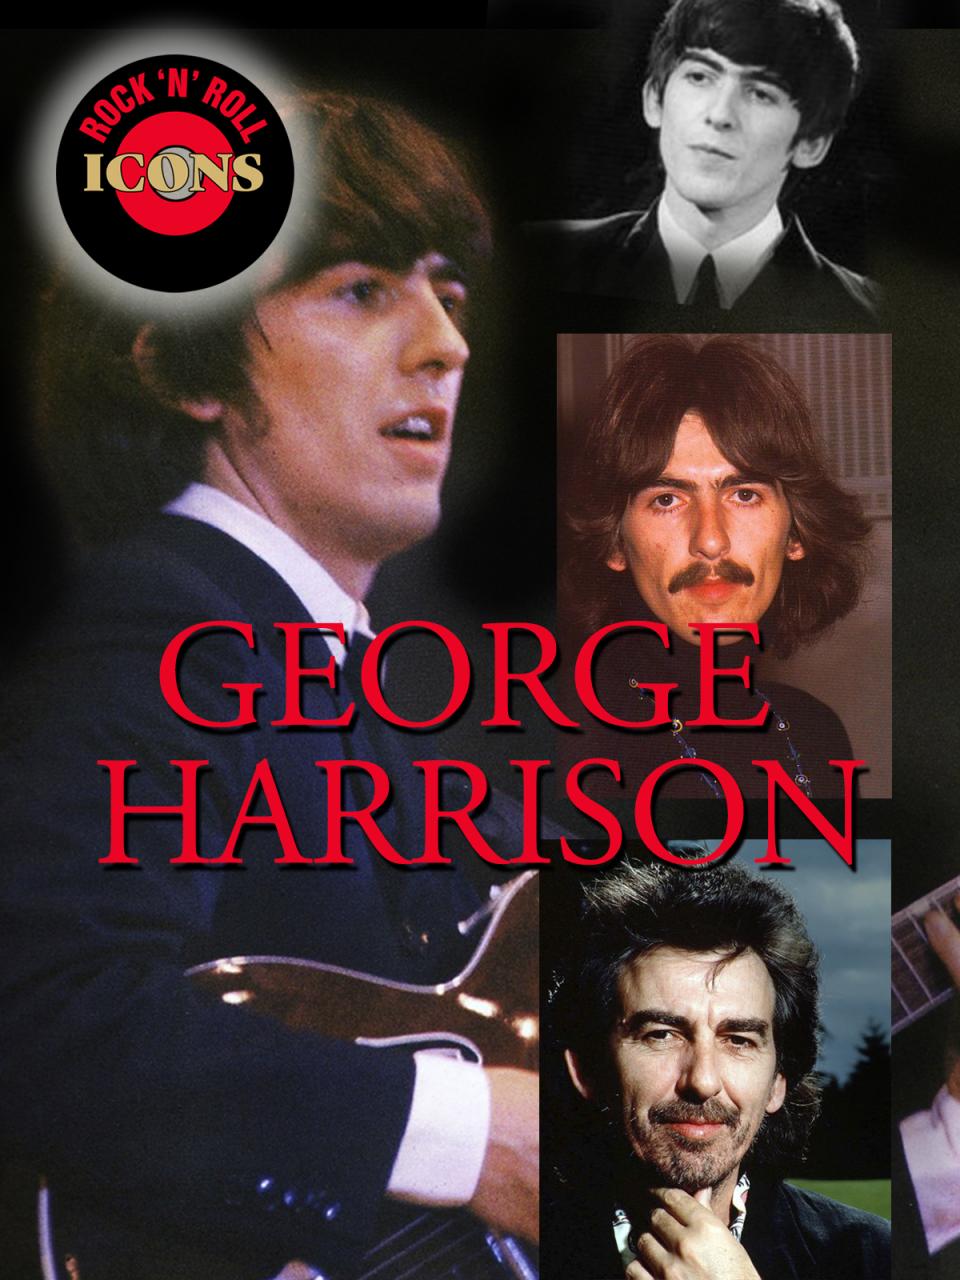 Rock 'n Roll Icons: George Harrison